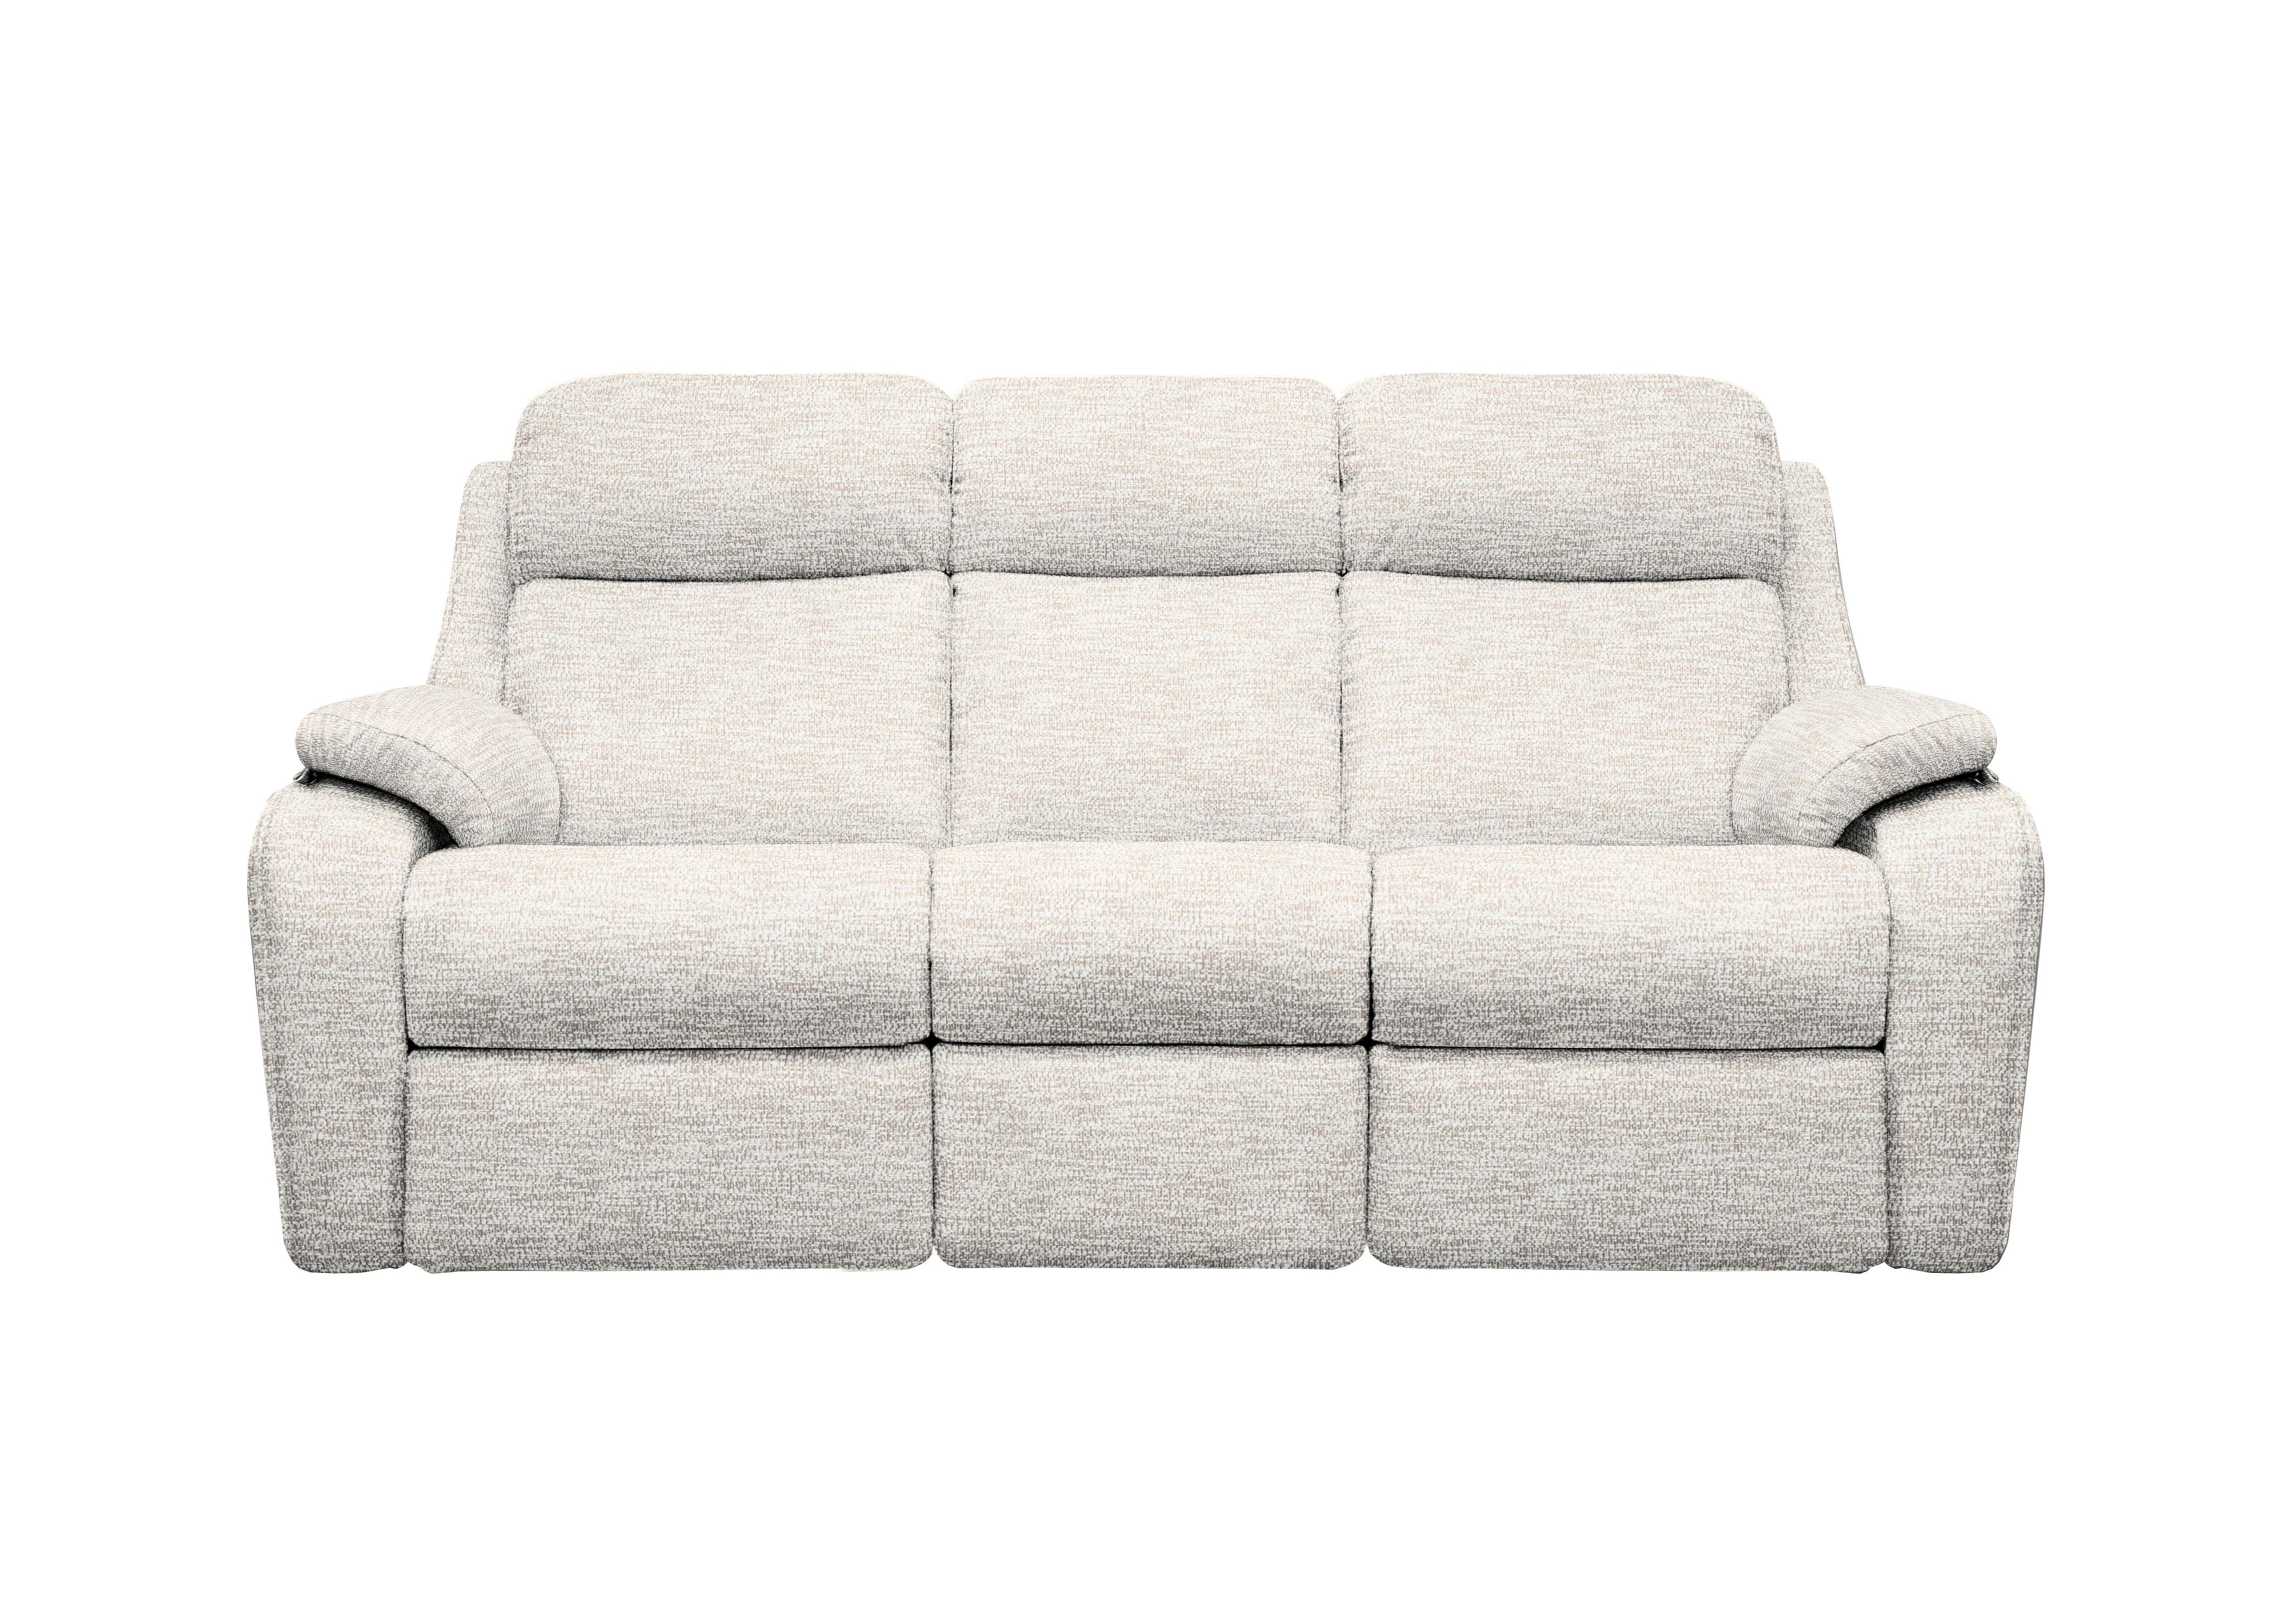 Kingsbury 3 Seater Fabric Sofa in C931 Rush Cream on Furniture Village